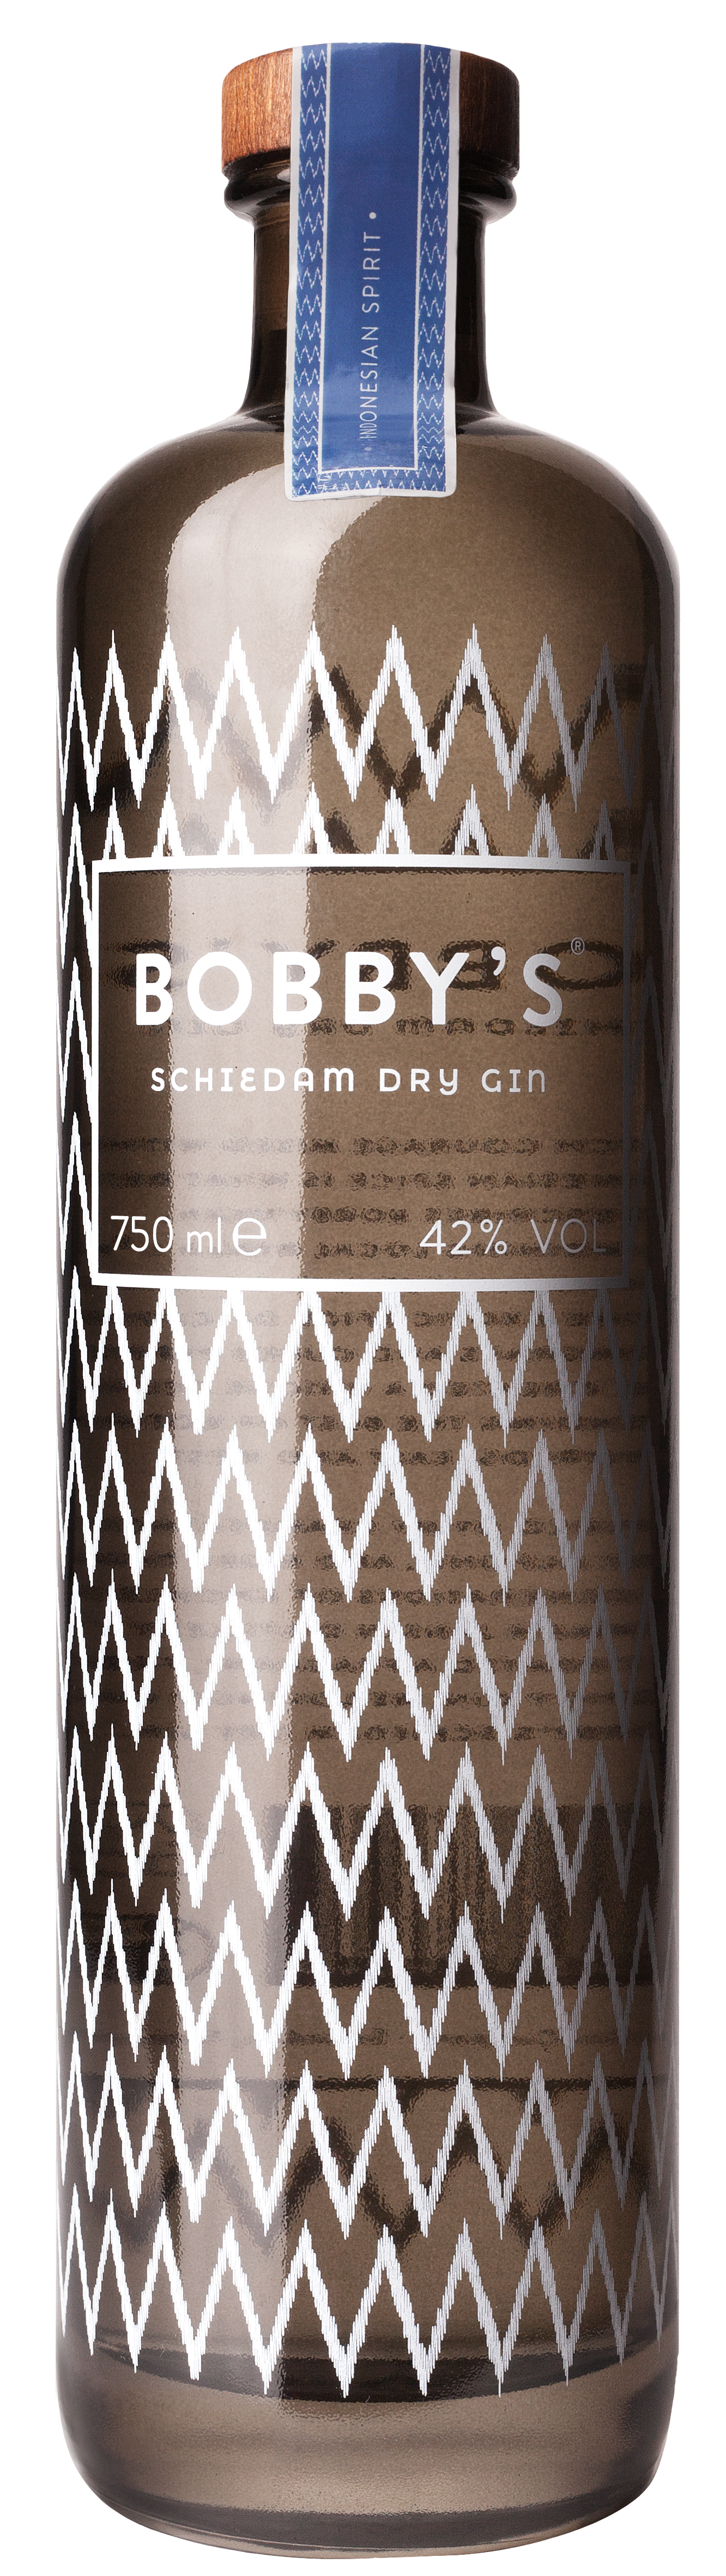 BOBBY'S DRY GIN